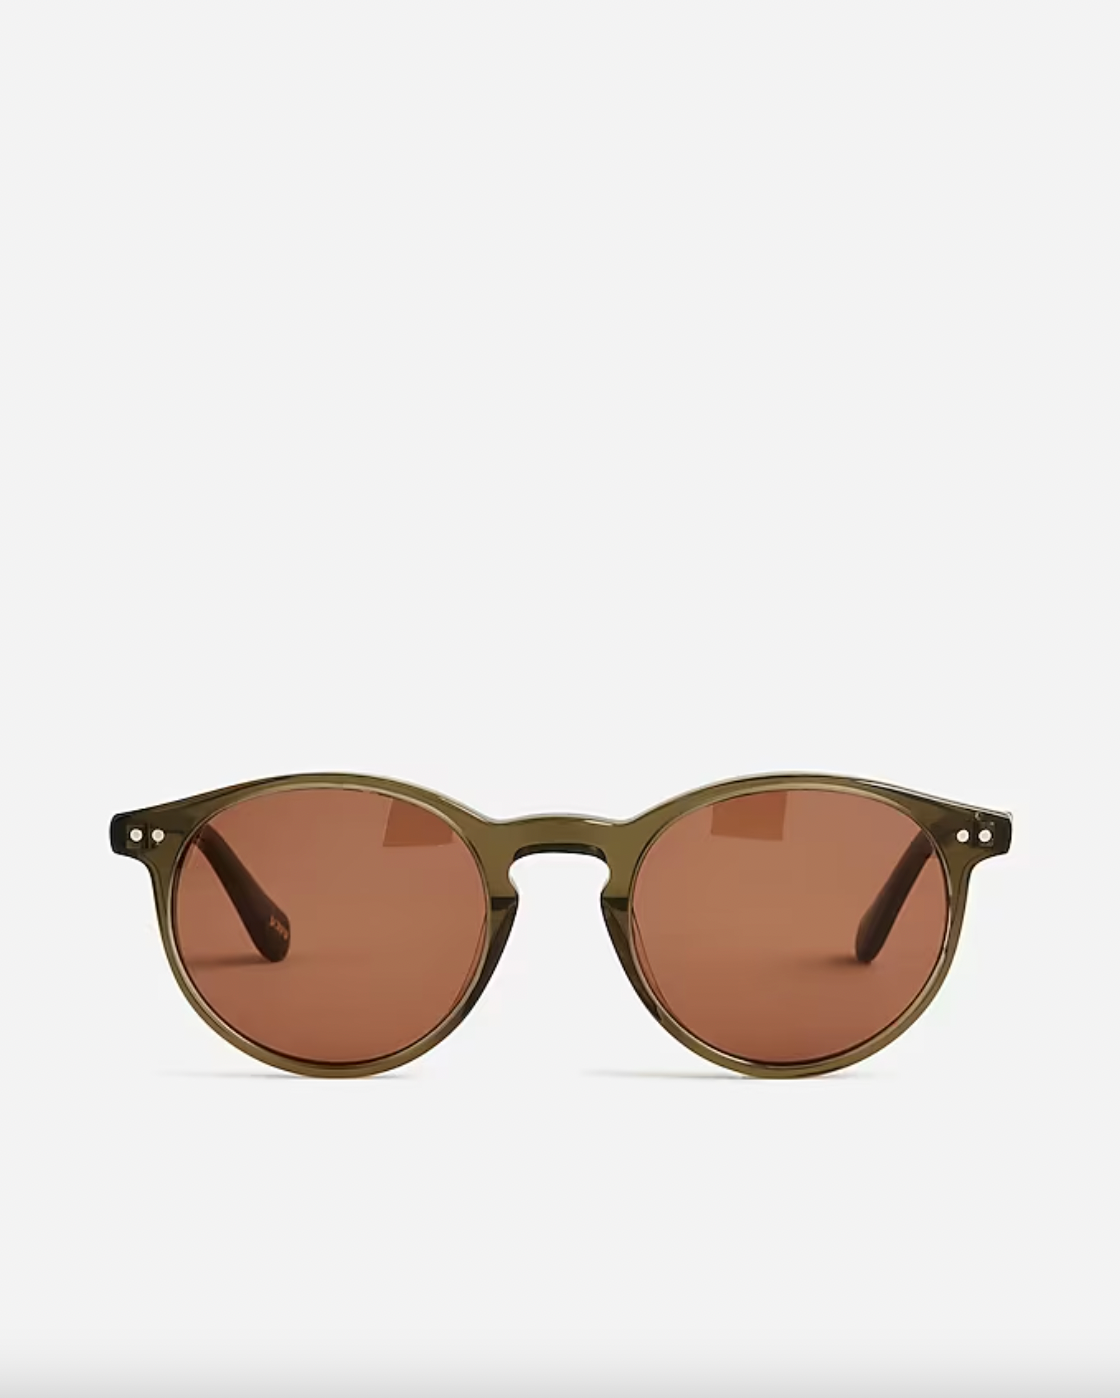 Vogue Eyewear x Millie Bobby Brown Sunglasses - Farfetch